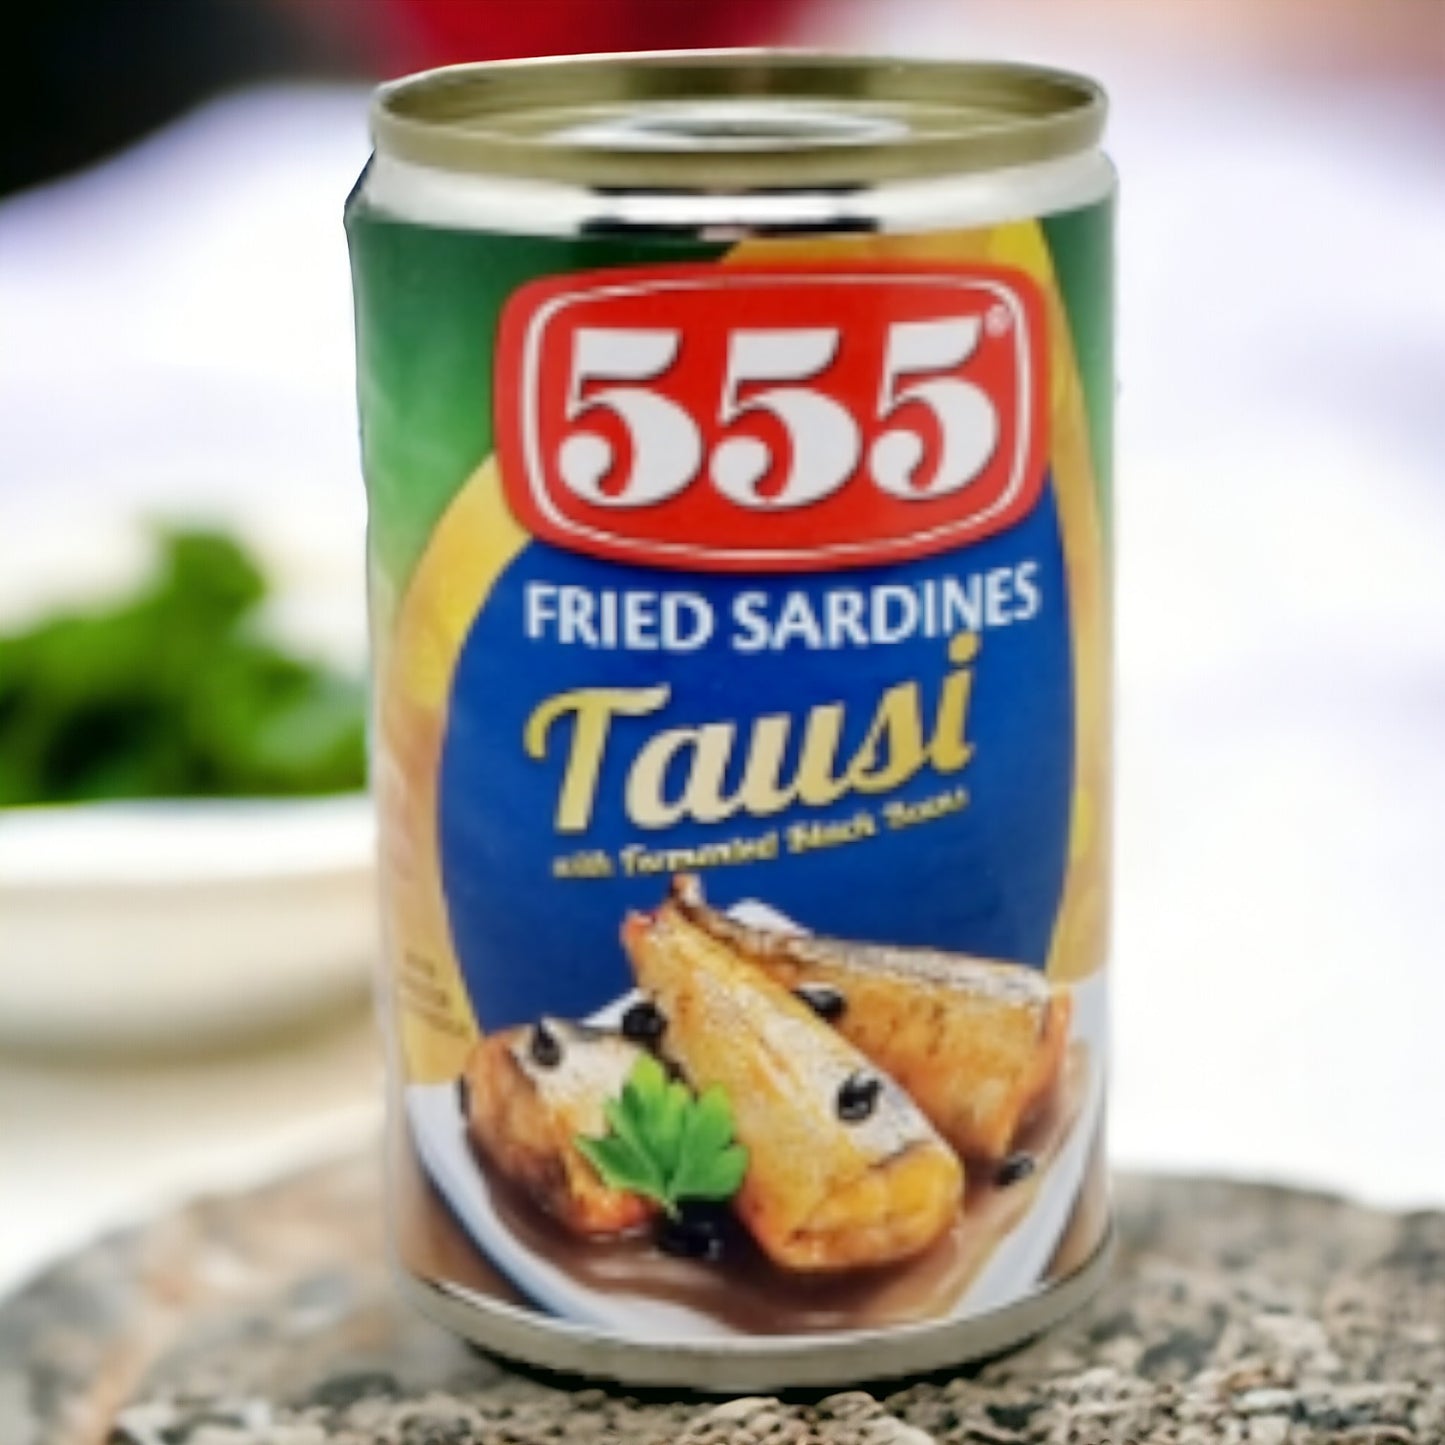 555 Sardines tausi